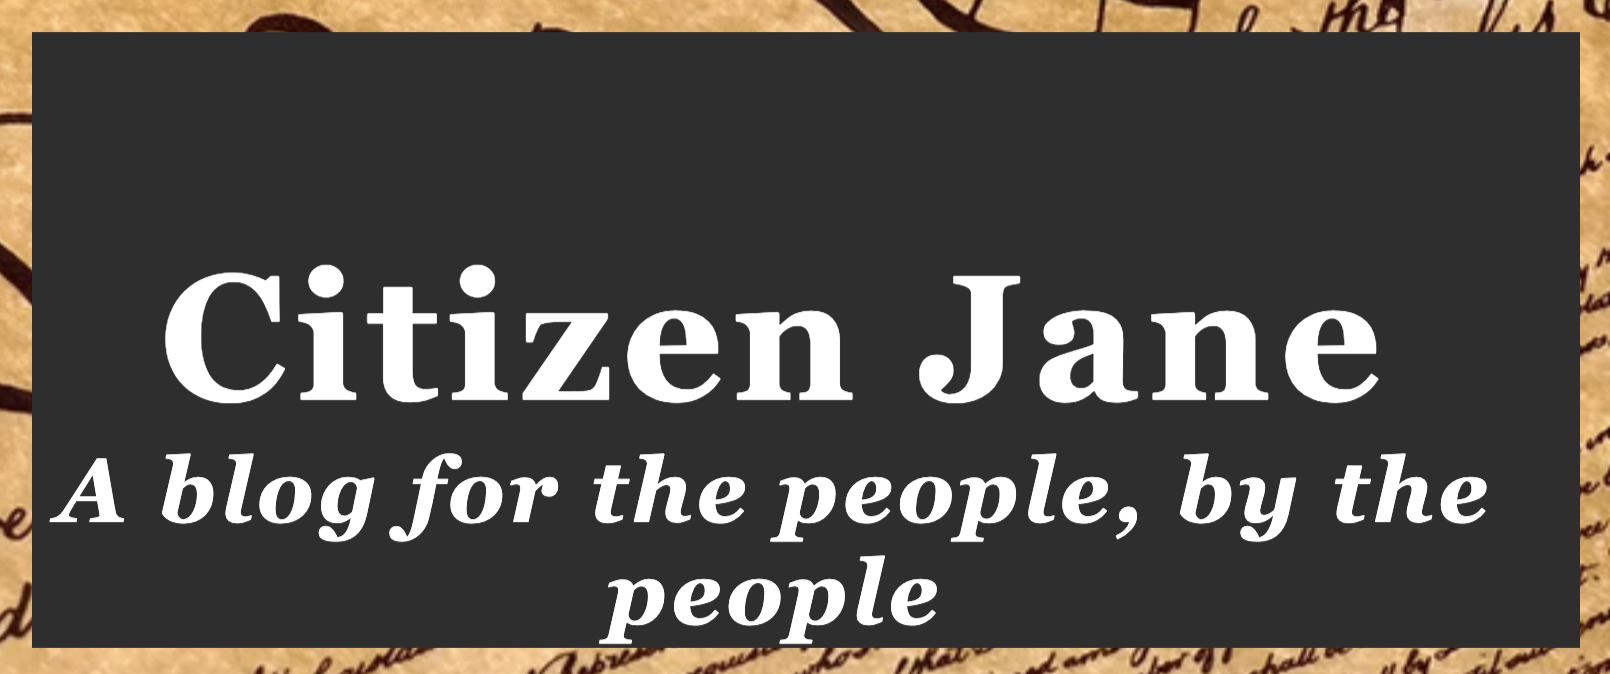 citizenJamne.png